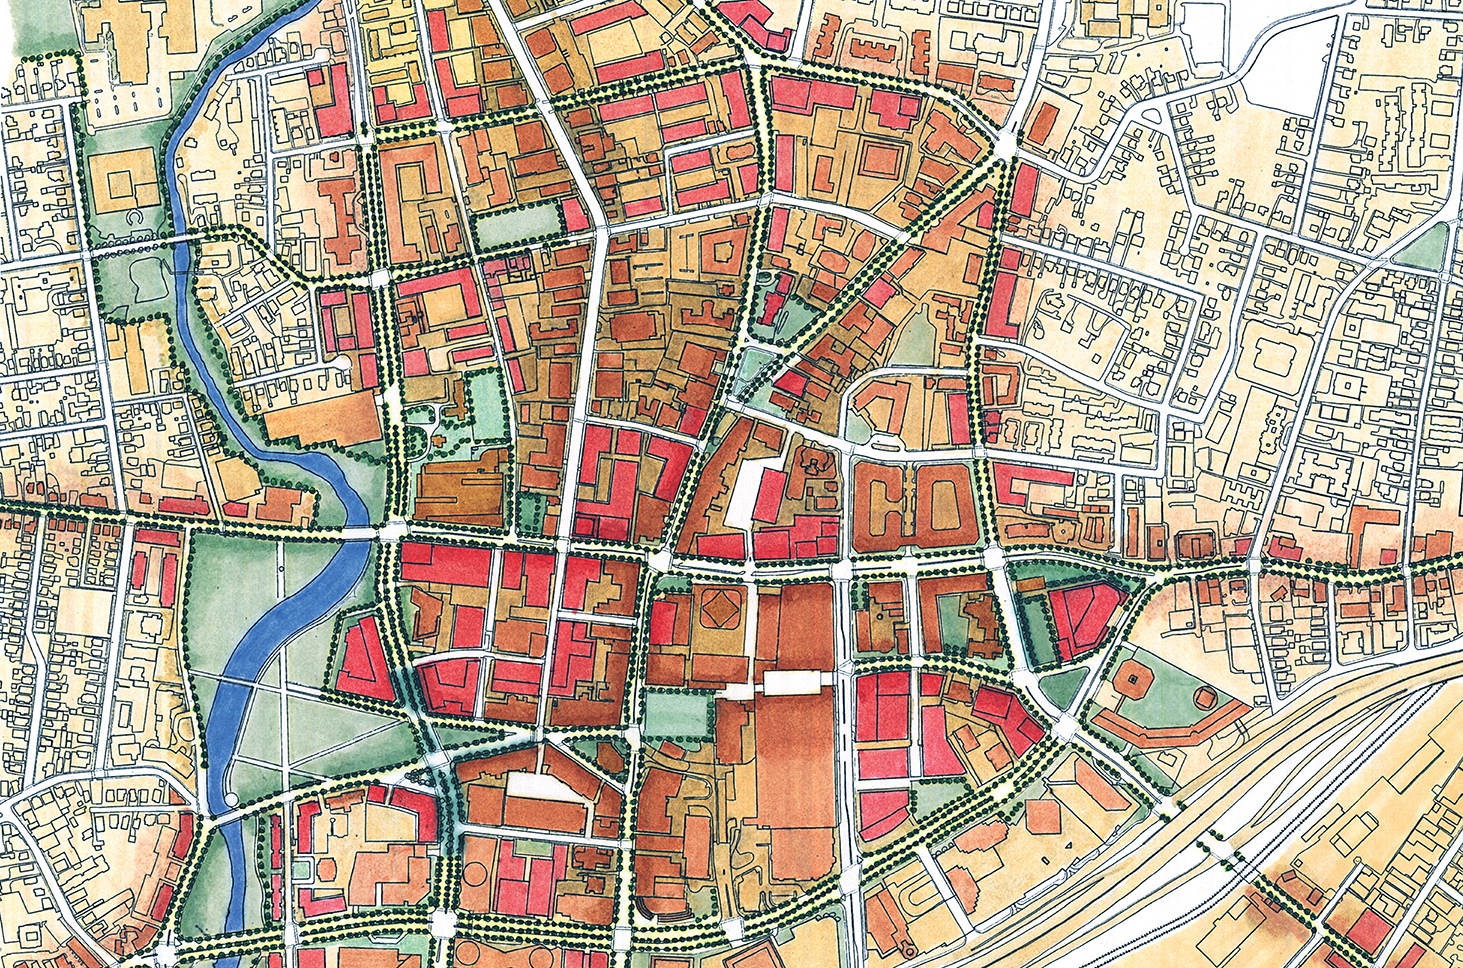 Stamford illustrative plan_re-sized